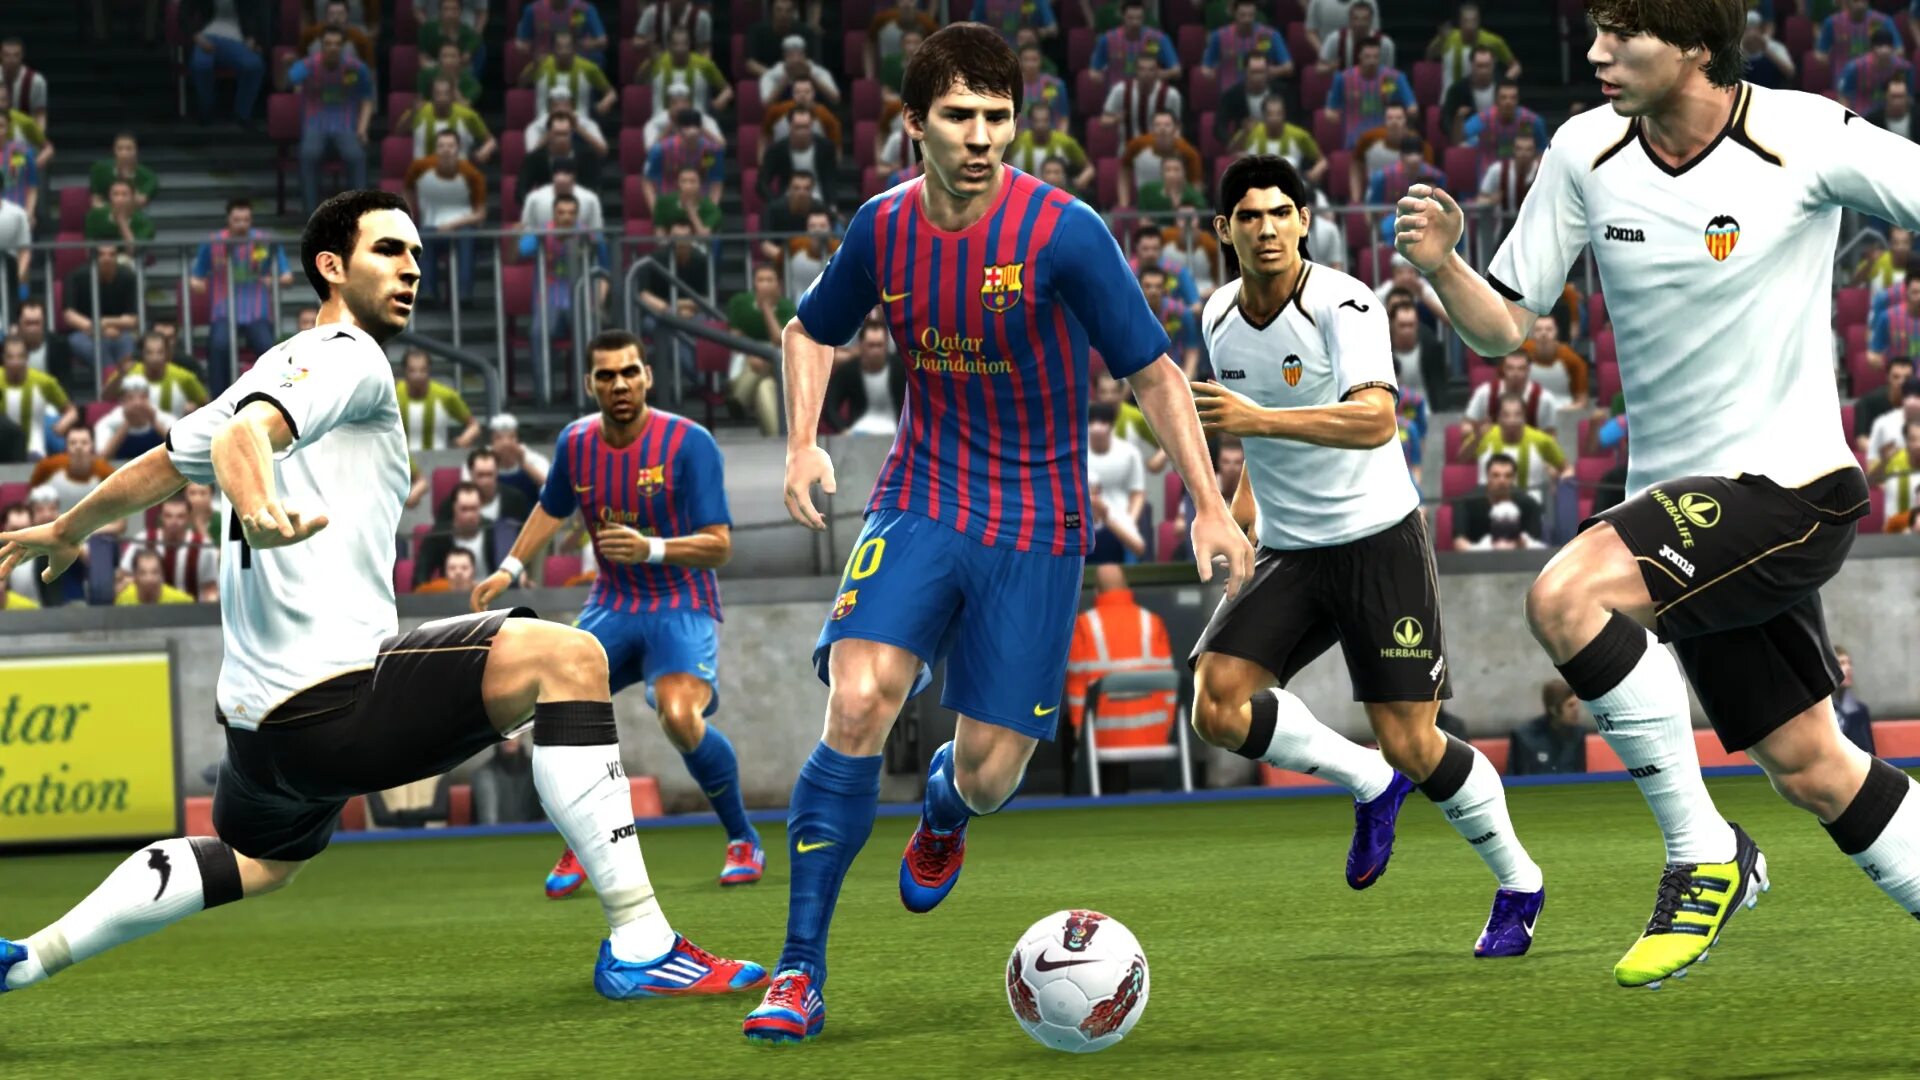 Games pro 11. Messi PES 2015. Pro Evolution Soccer 2013 Xbox 360. Pro Evolution Soccer 1996. Pro Evolution Soccer 2014.